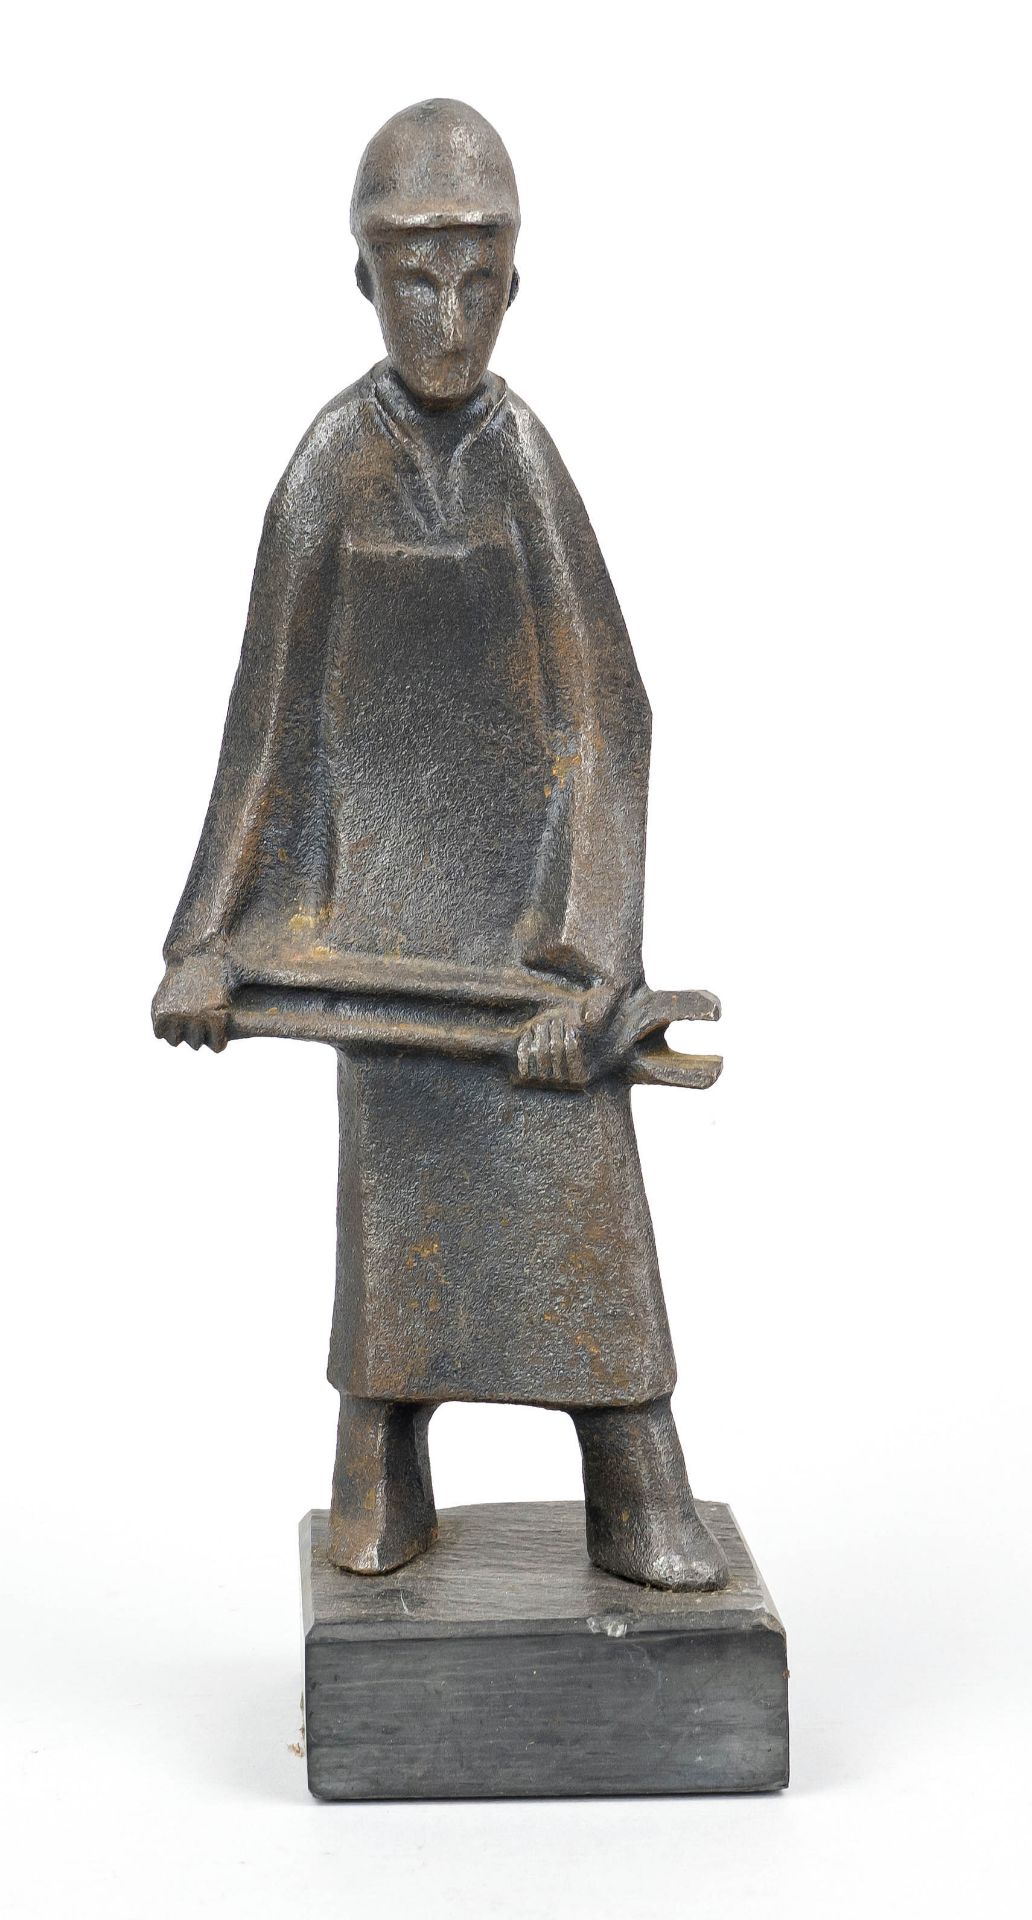 Monogrammist PK, 2nd half 20th century, standing worker with tongs, dark gray cast iron on stone